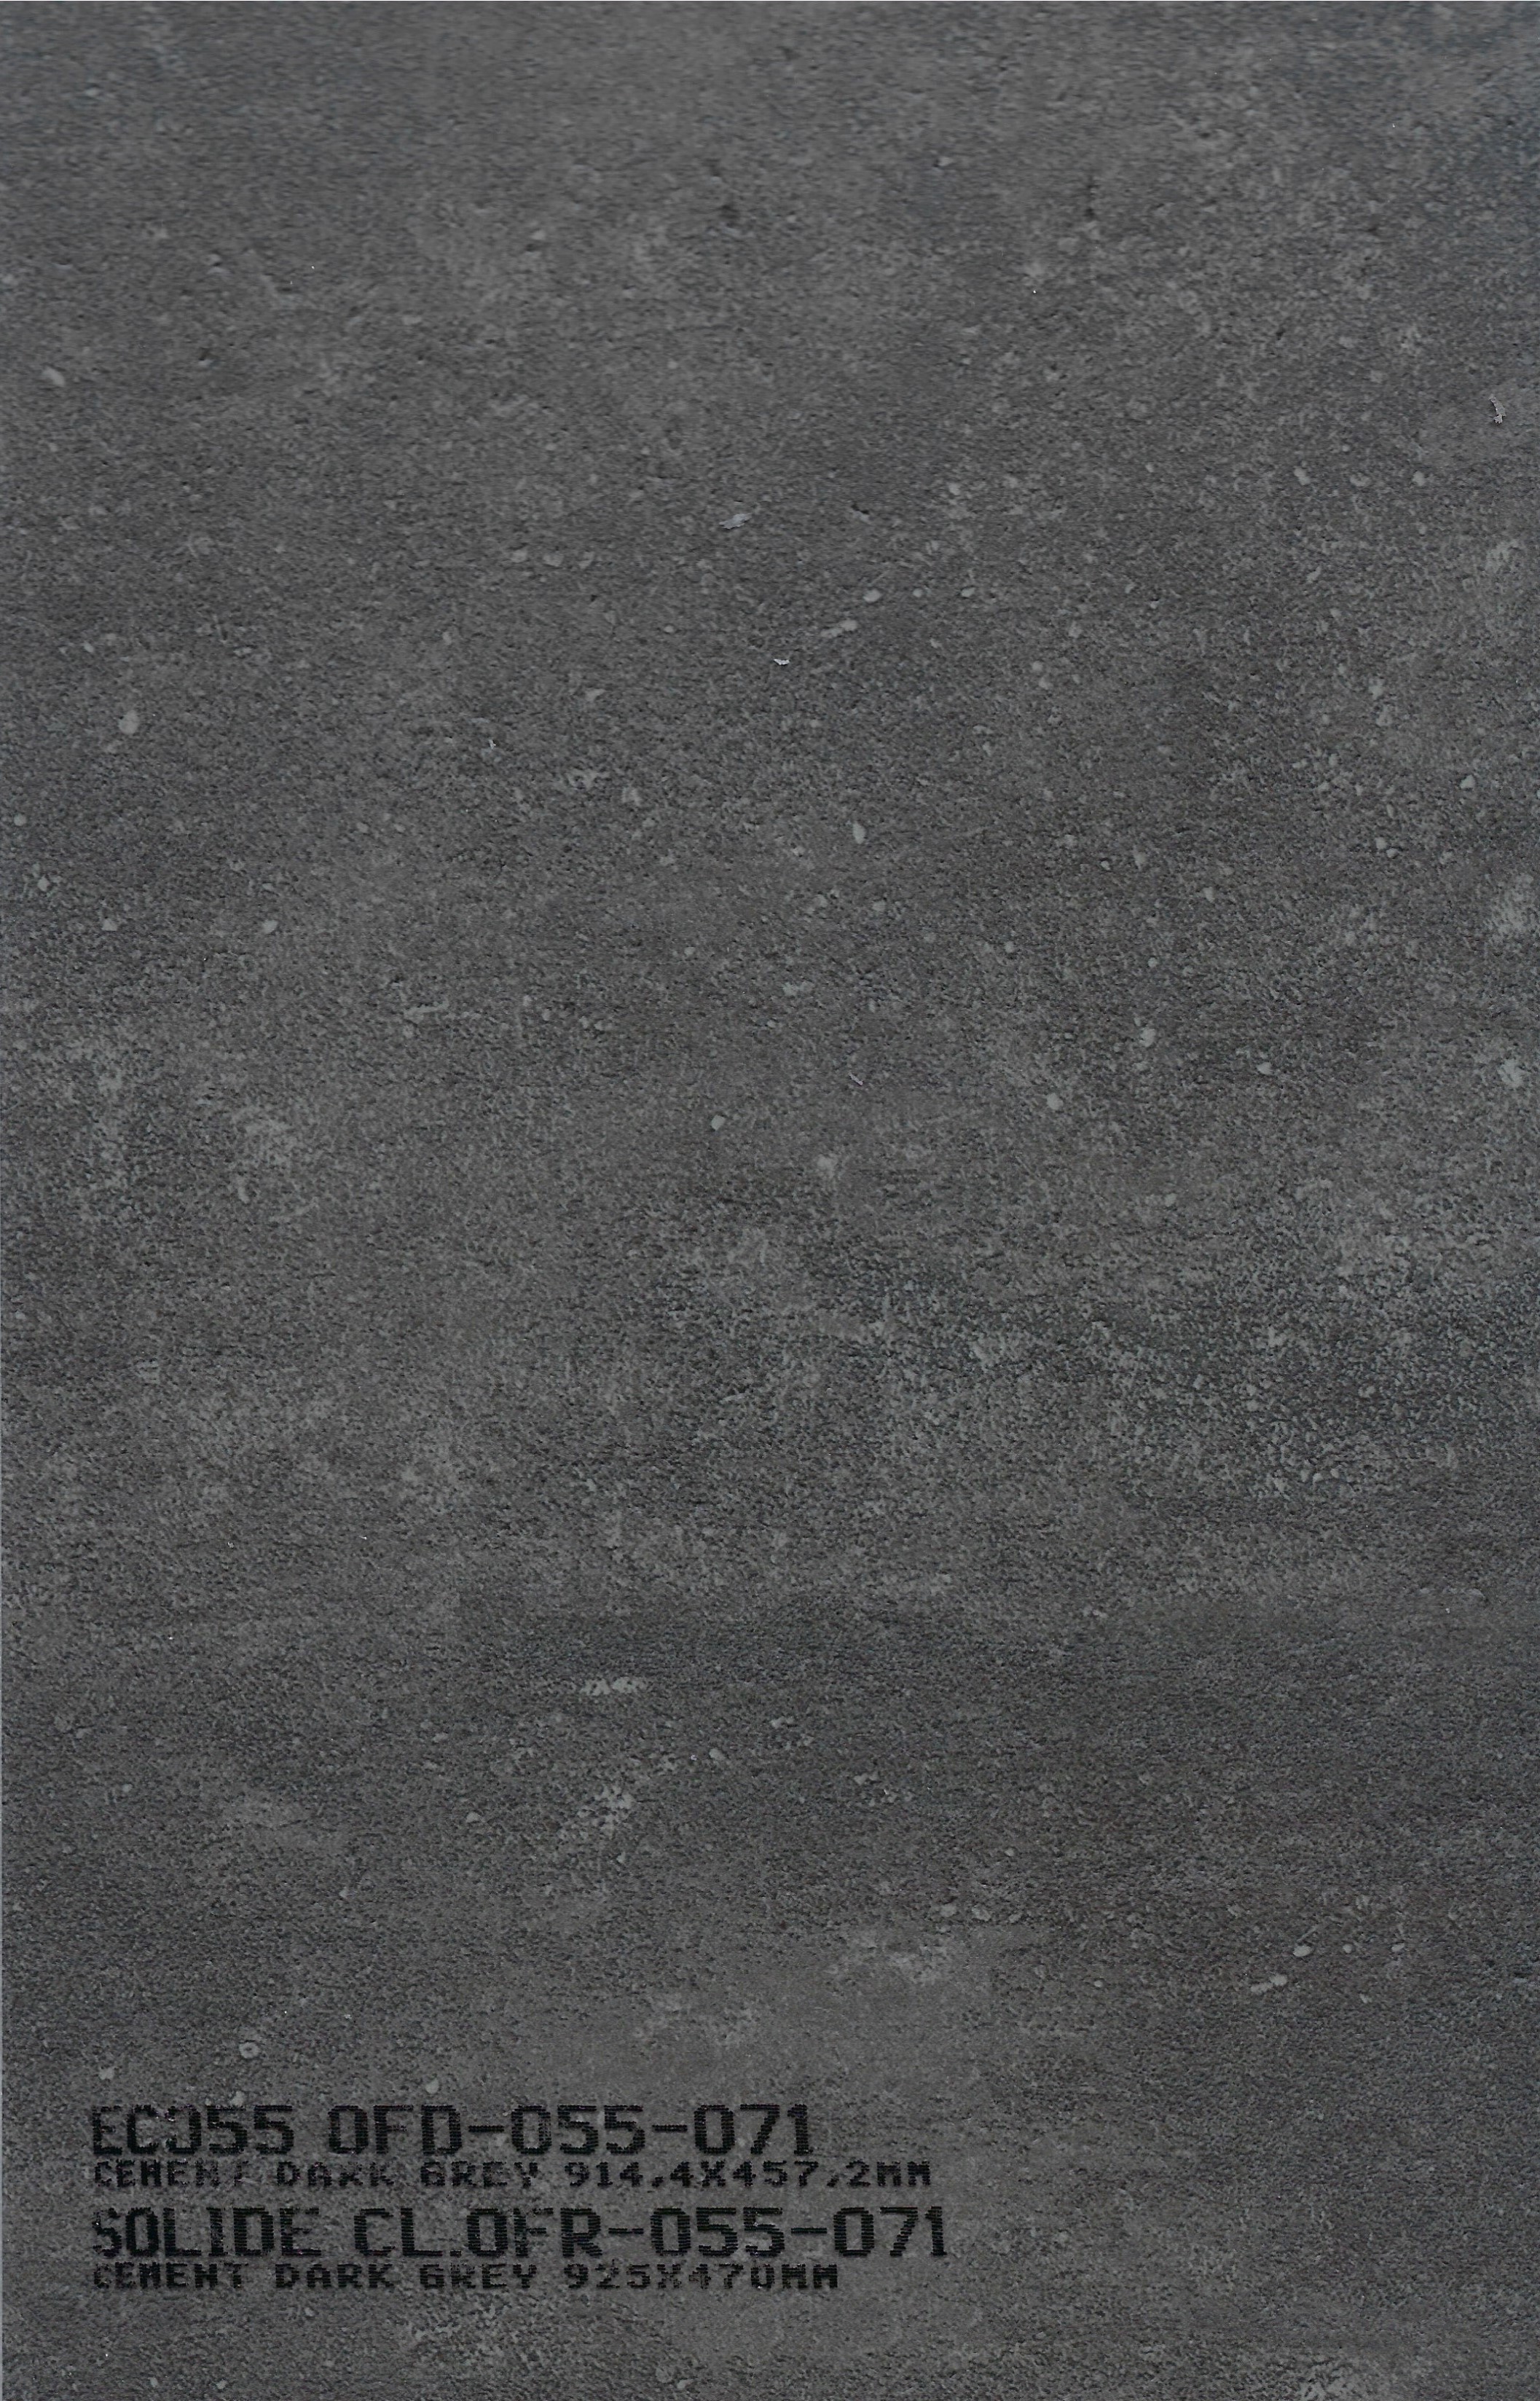 Vinyl SOLIDE CLICK 55 071 - Cement Dark Grey